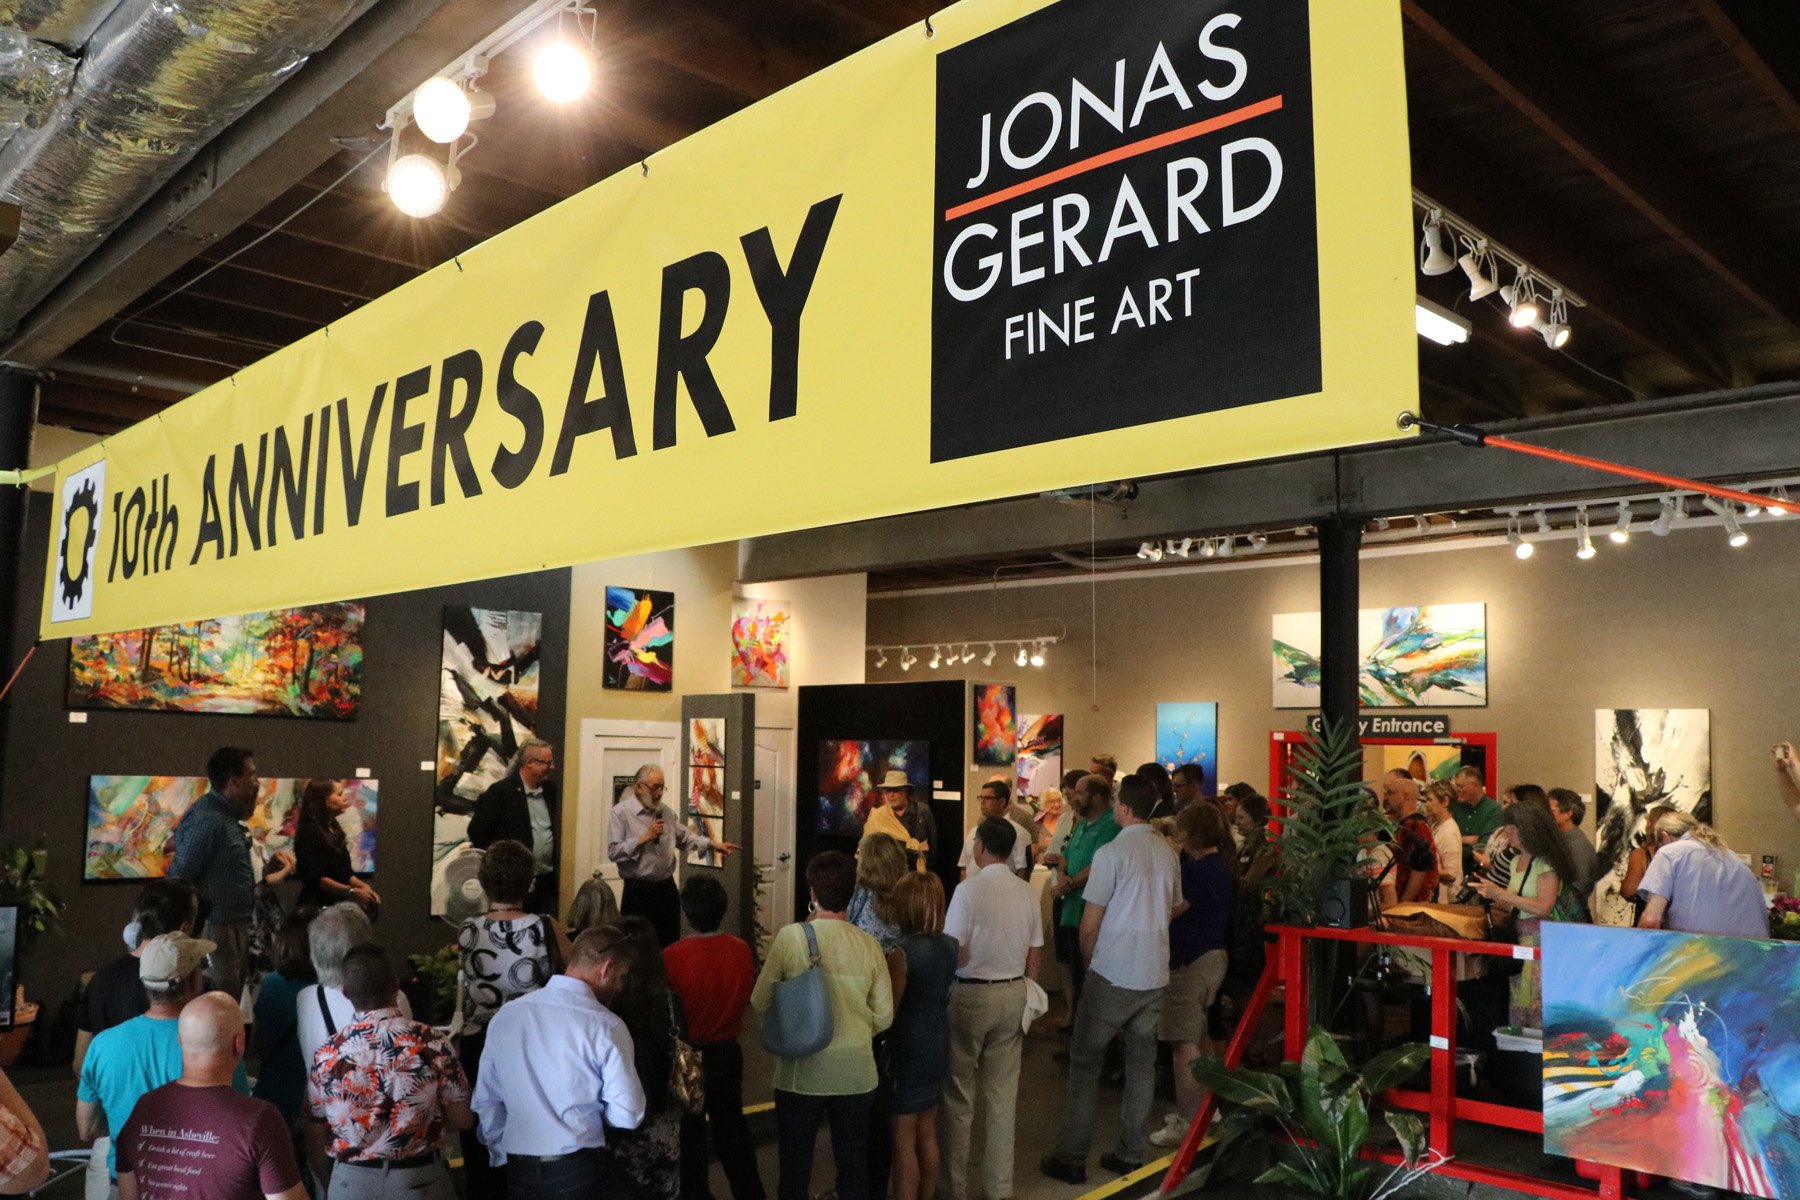 Jonas Gerard Fine Art celebrates 10 years in Asheville. 